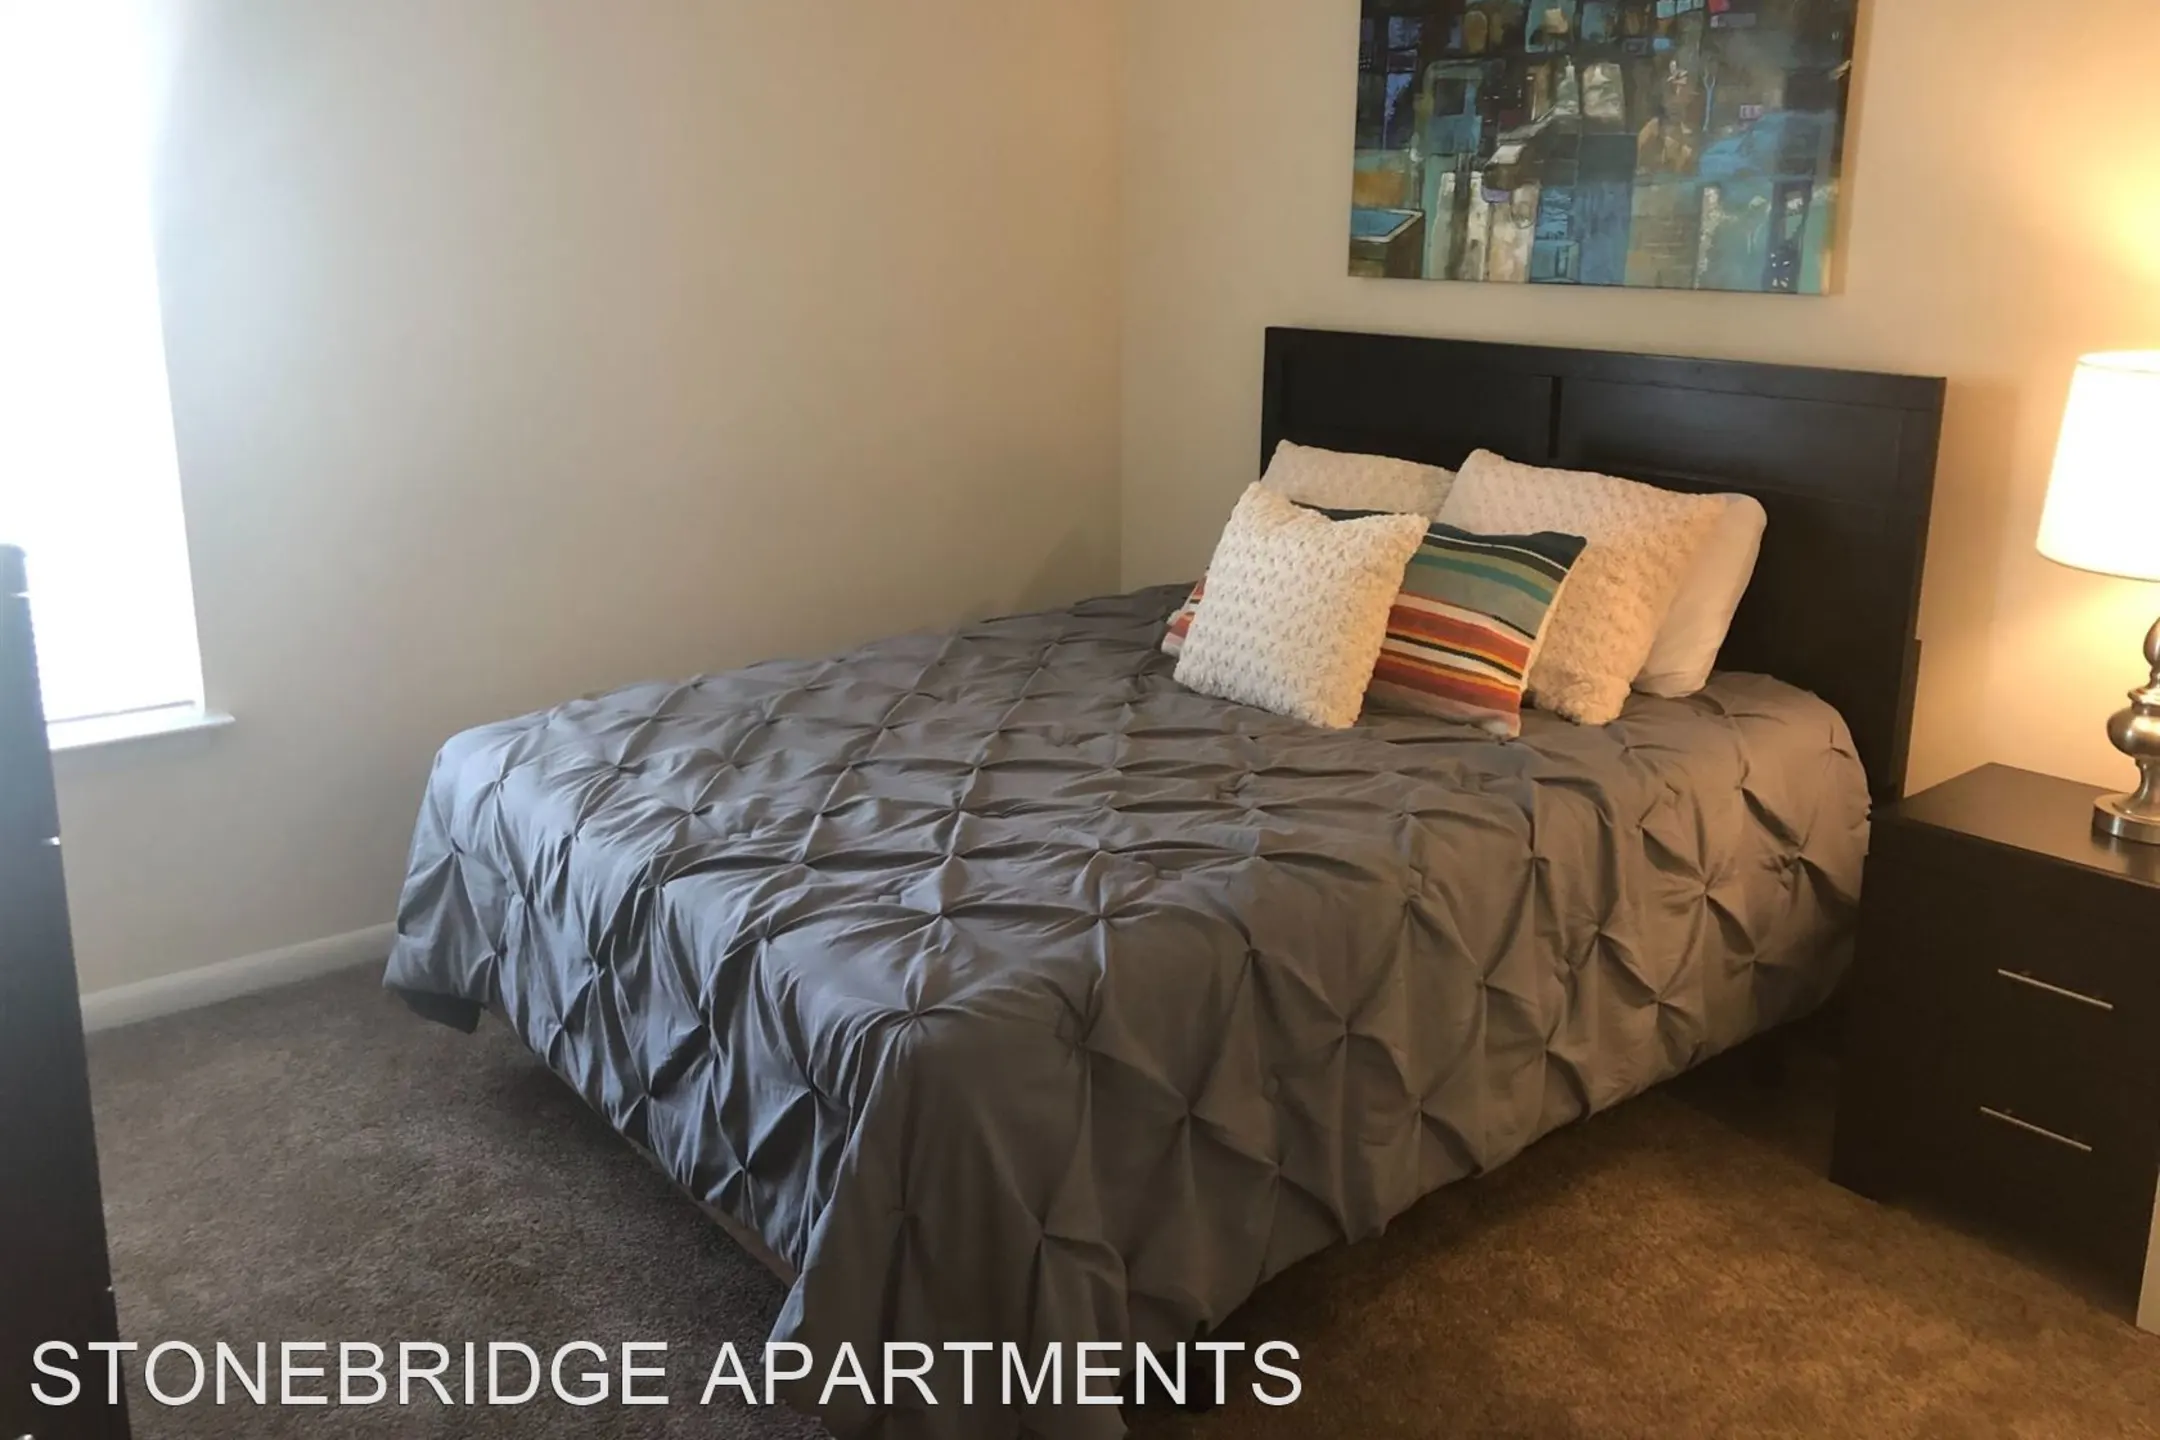 Bedroom - Stonebridge Apartments - Chesapeake, VA